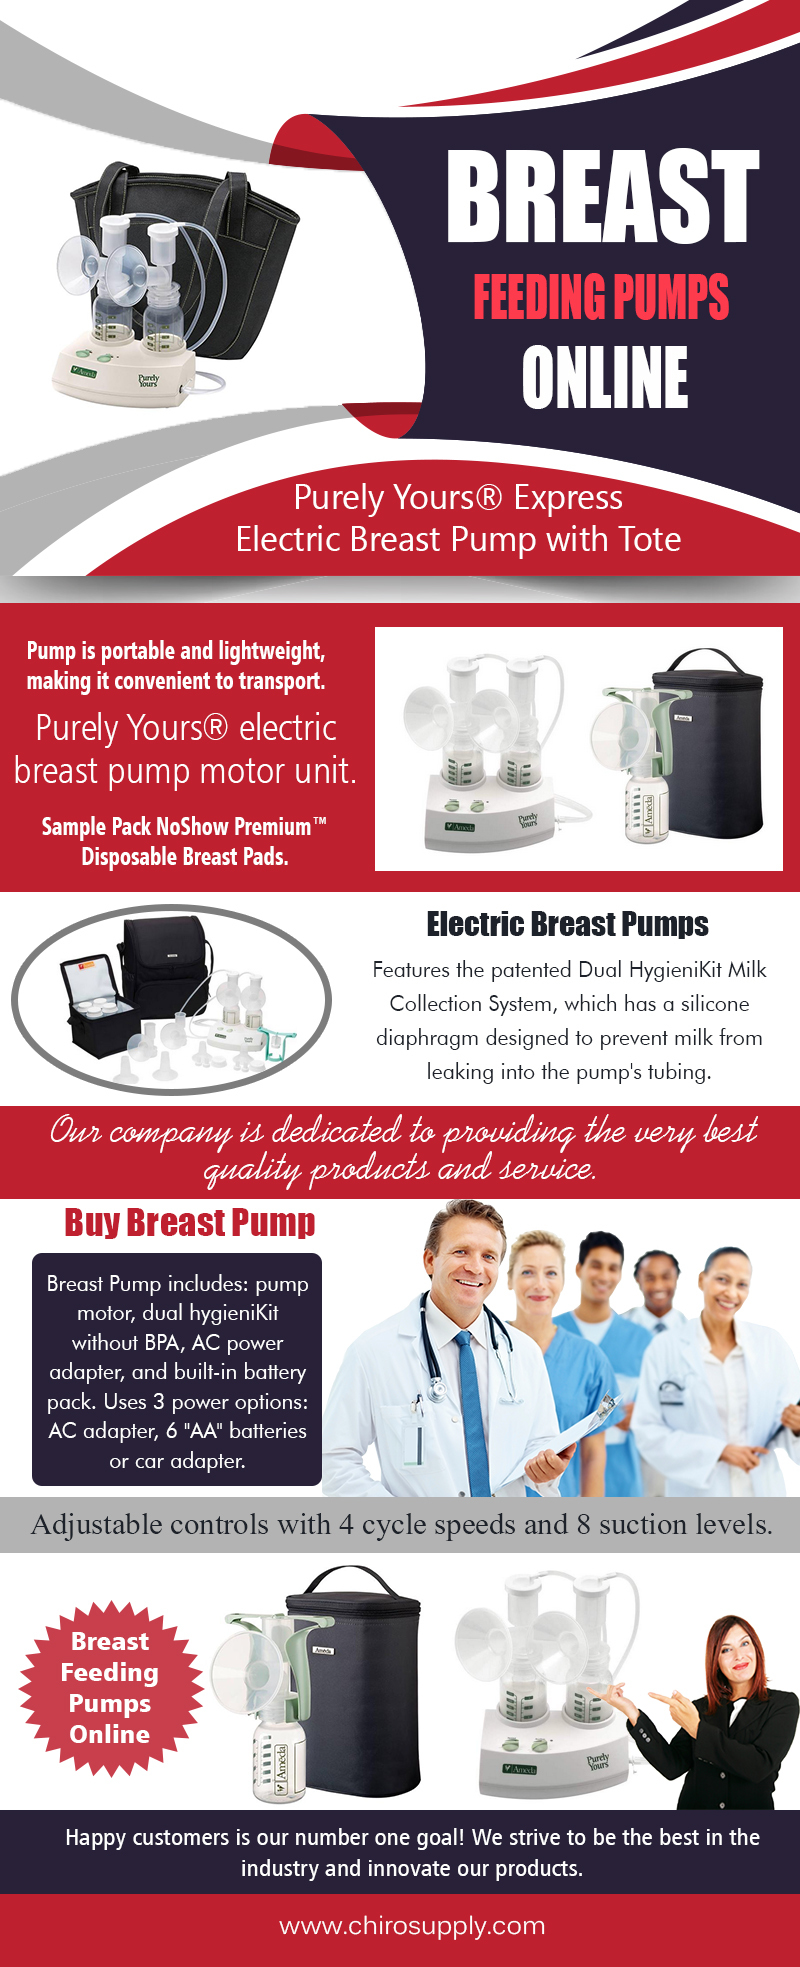 Breast Feeding Pumps Online | 8775639660 | chirosupply.com